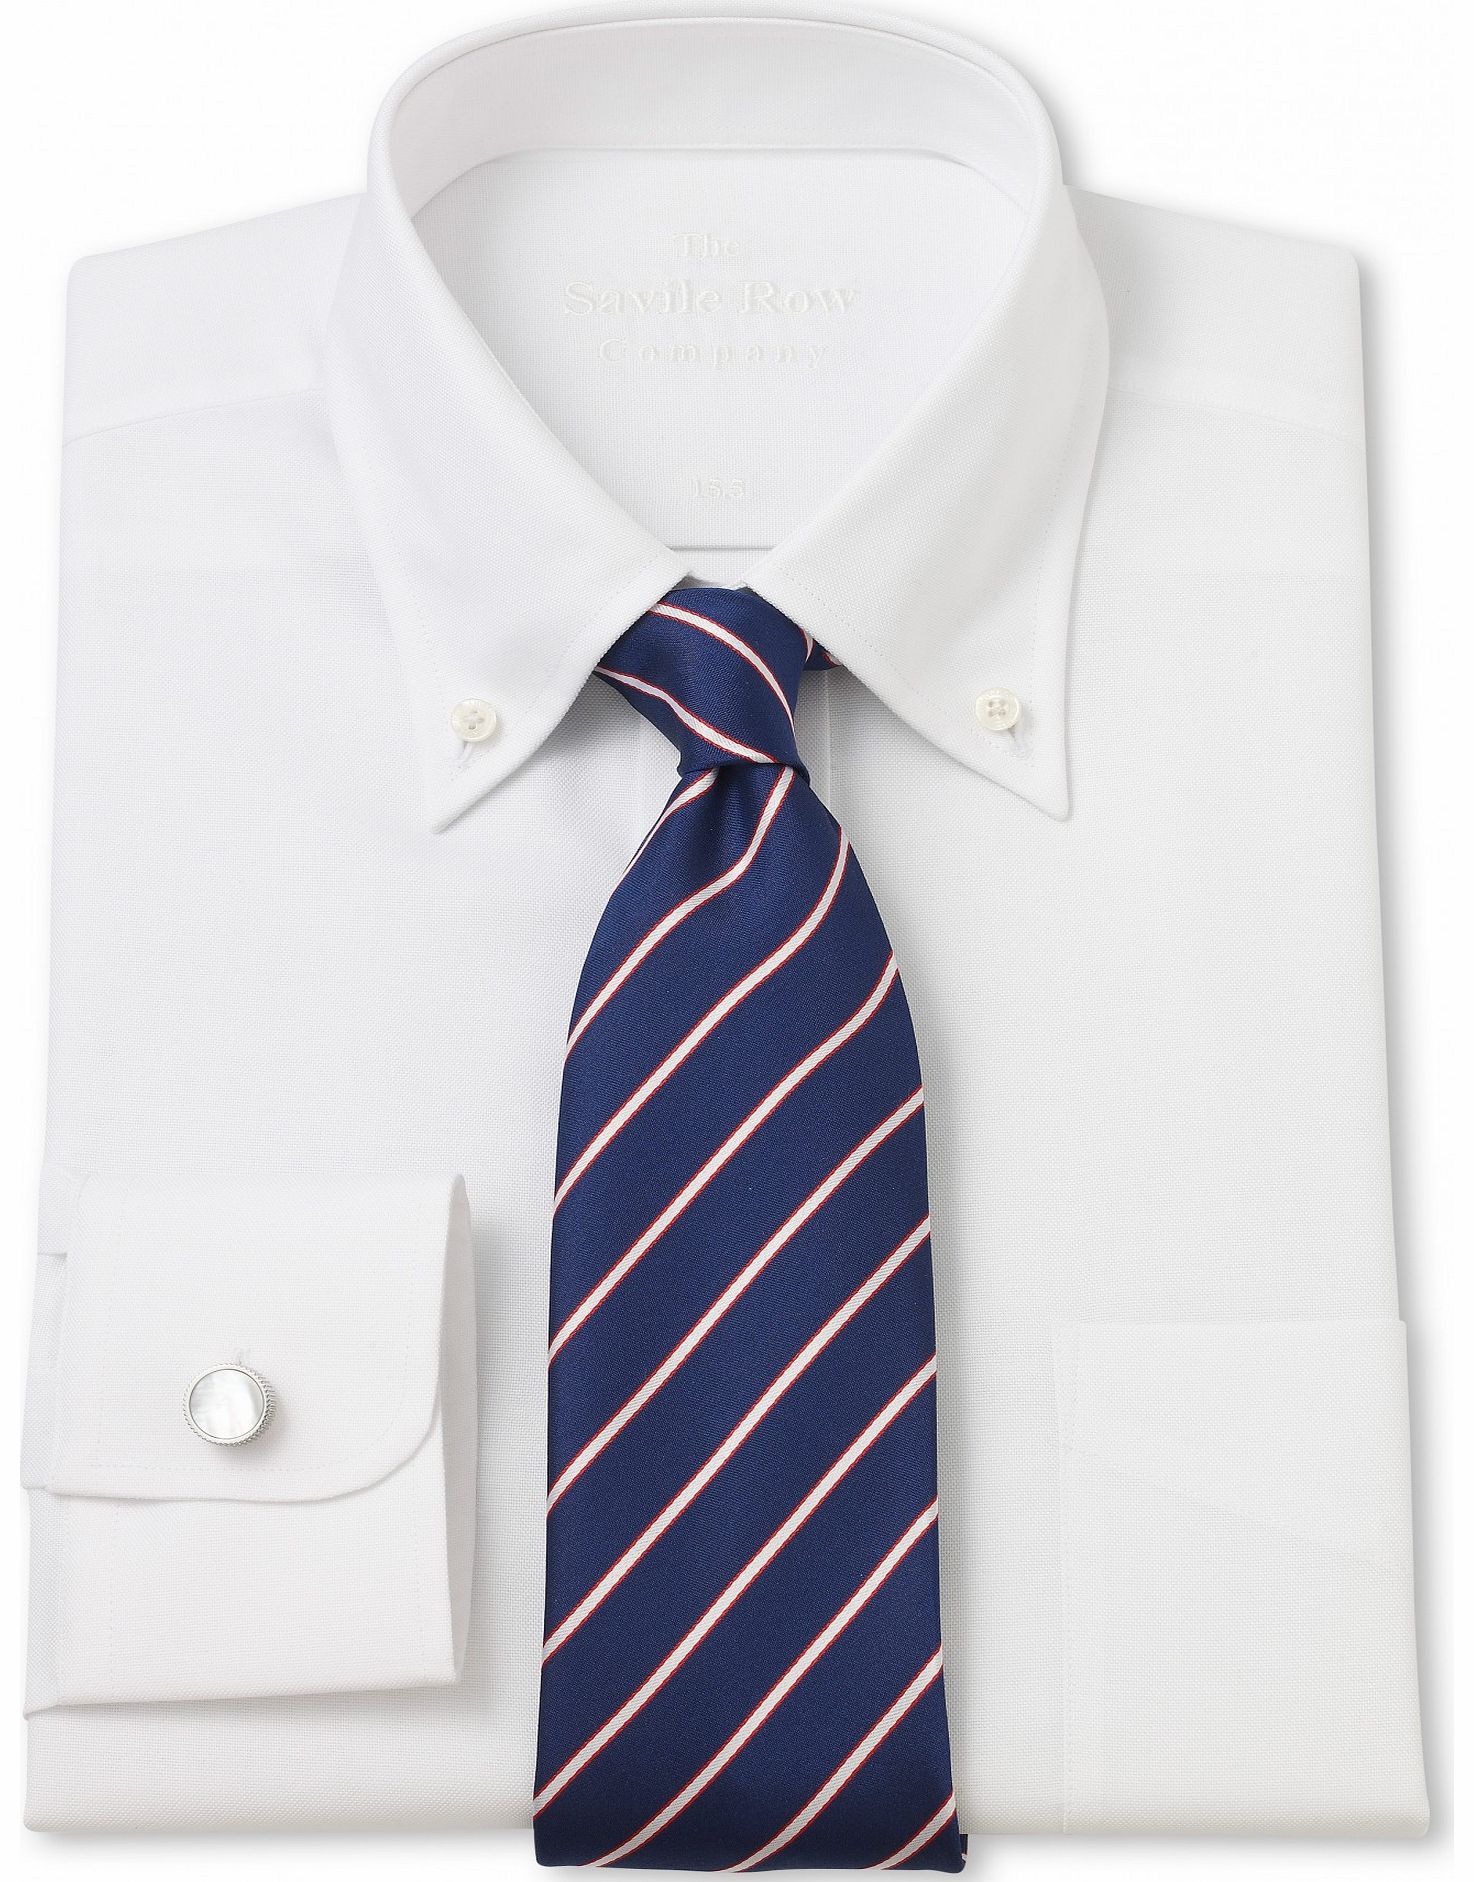 Savile Row Company White Oxford Button Down Classic Shirt 18``